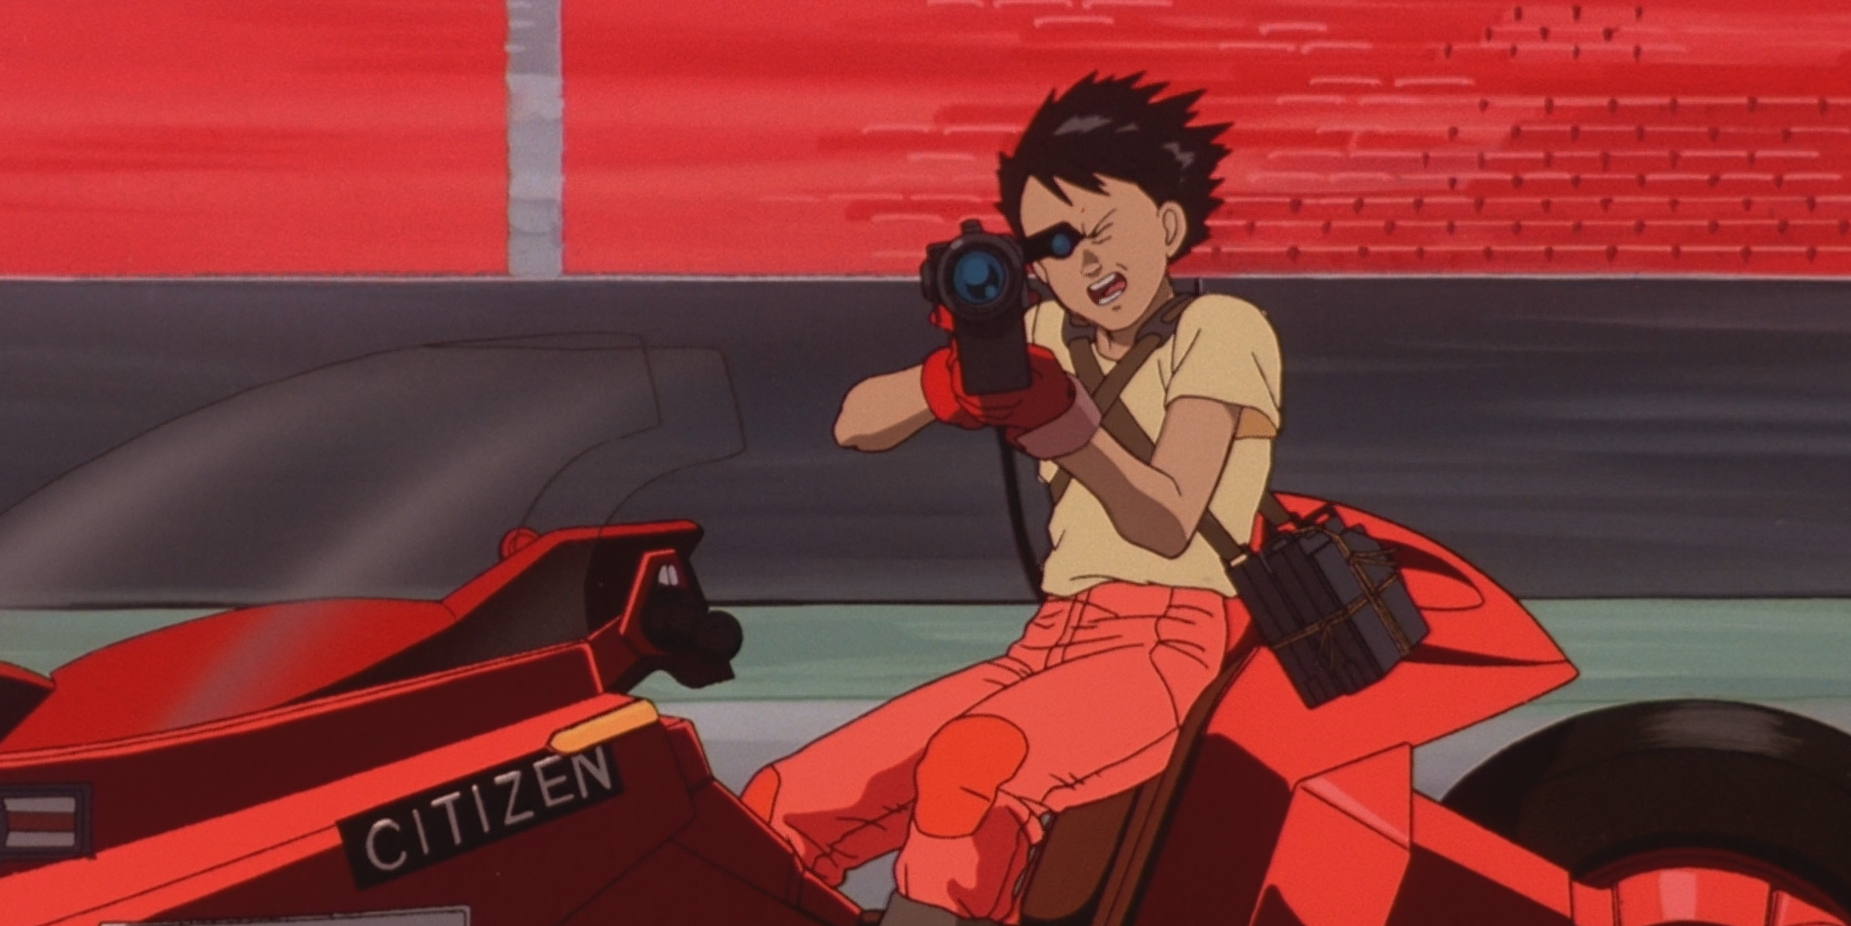 akira anime 1988 featured